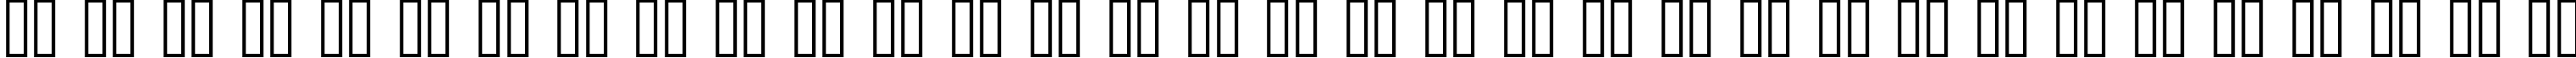 Пример написания русского алфавита шрифтом 11S01 Black Tuesday Italic